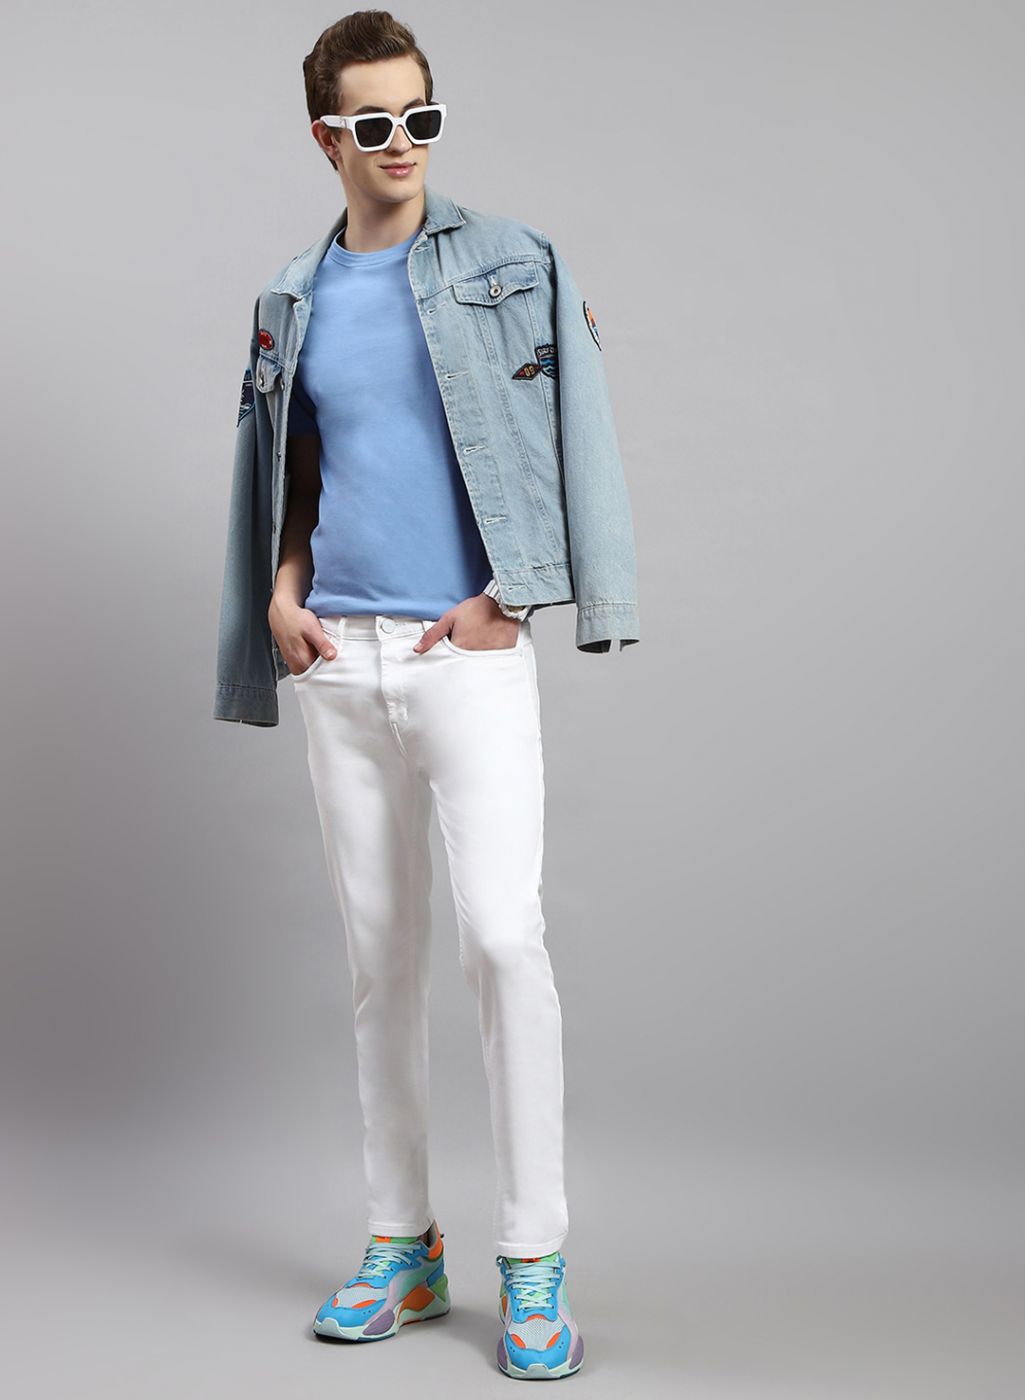 Buy HANGON Solid Color Jeans Jackets Denim Jacket Men Fashion Autumn Slim Jackets  Mens Casual Denim Coats Turn-Down Collar Streetwear at Amazon.in